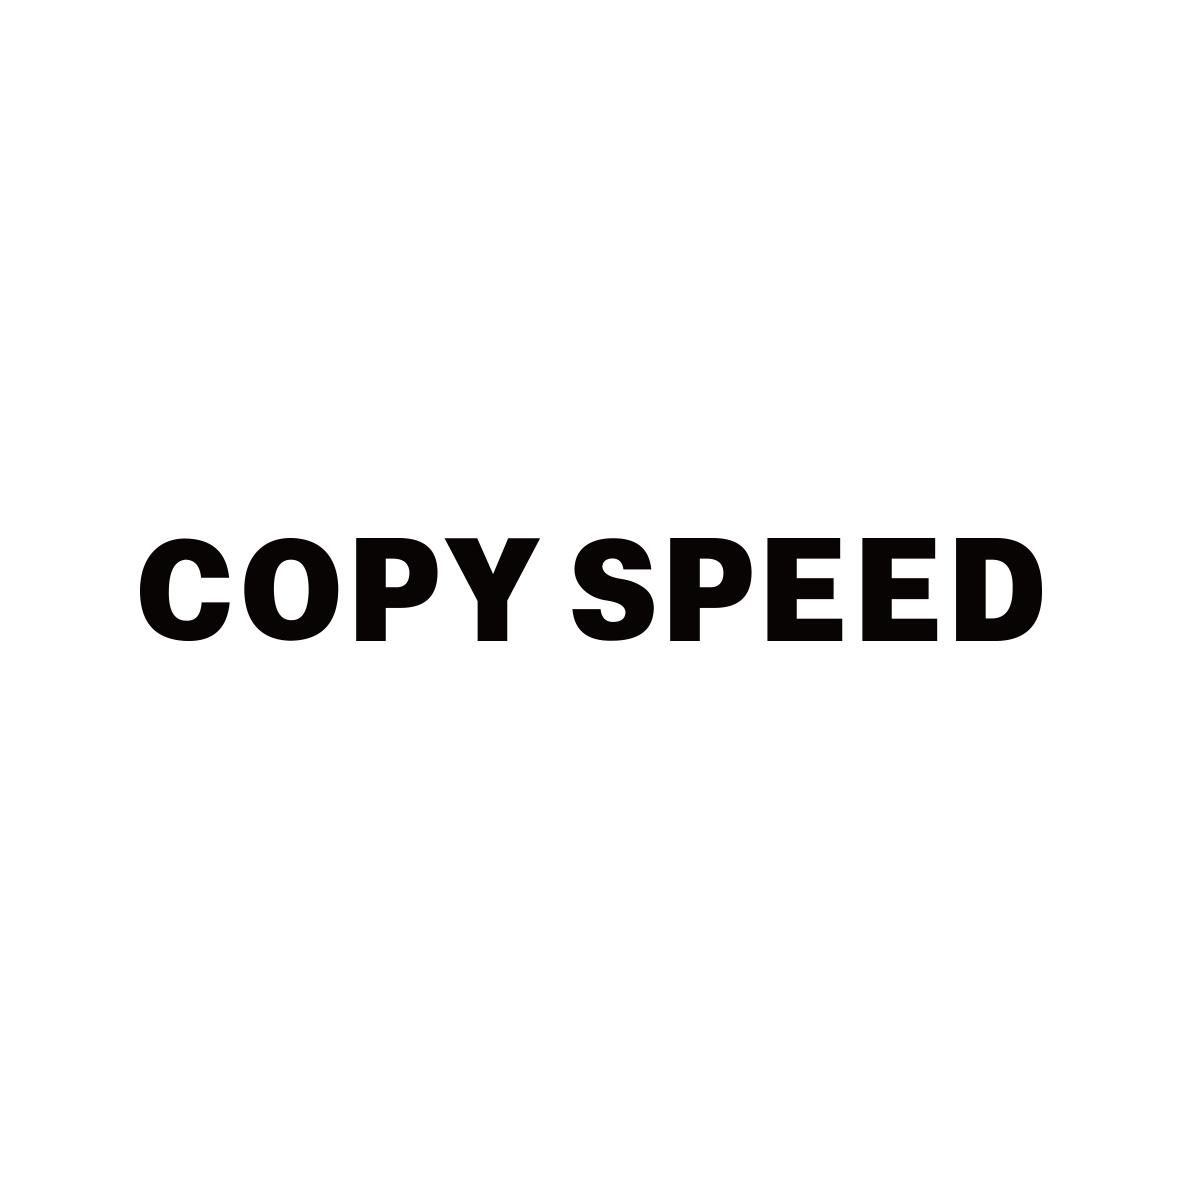 COPY SPEED书刊用纸商标转让费用买卖交易流程